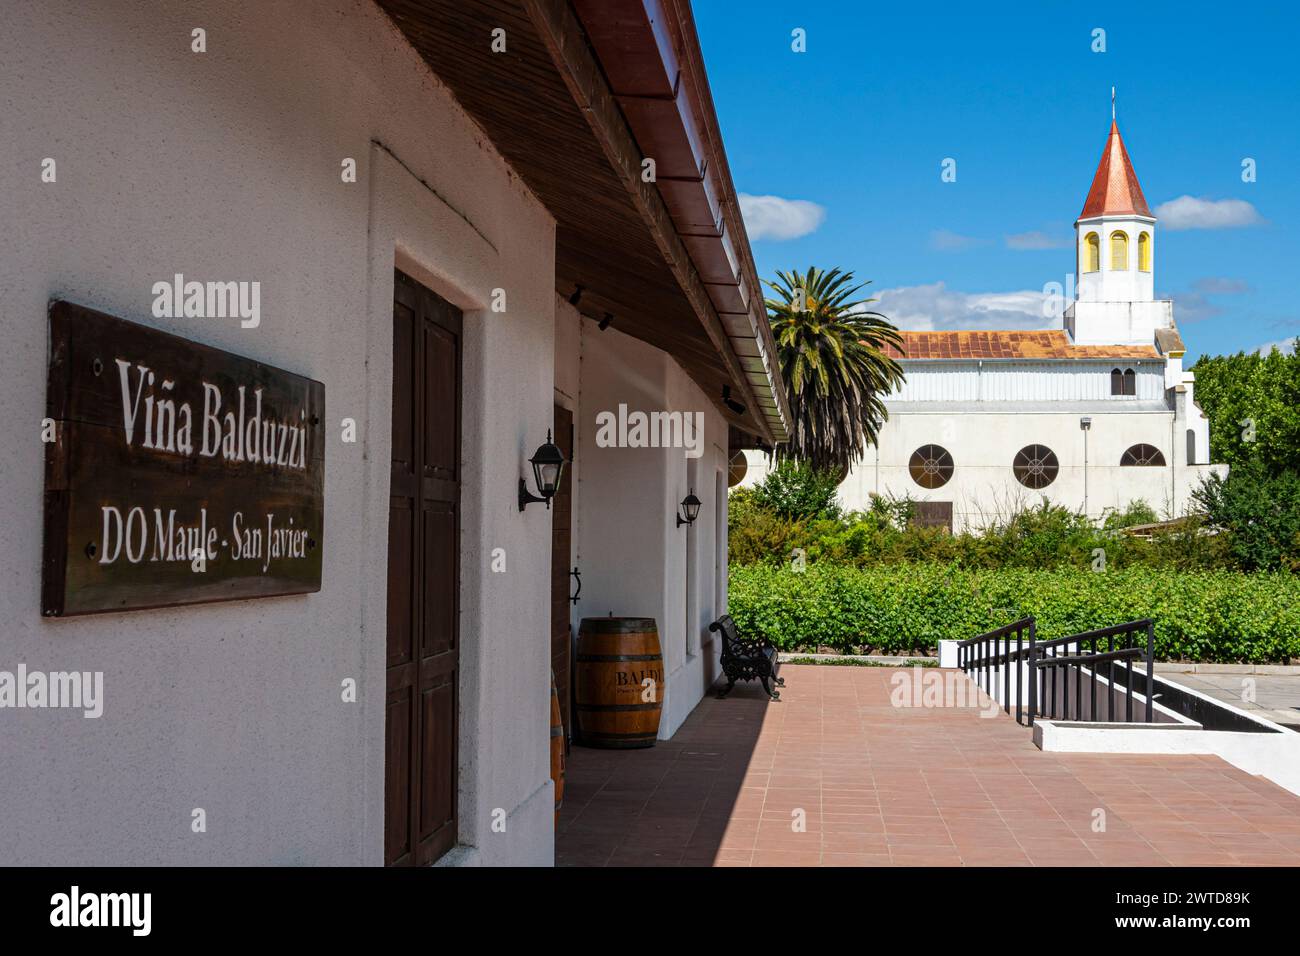 Balduzzi winery , San Javier, Maule valley, entrance,  Chile Stock Photo